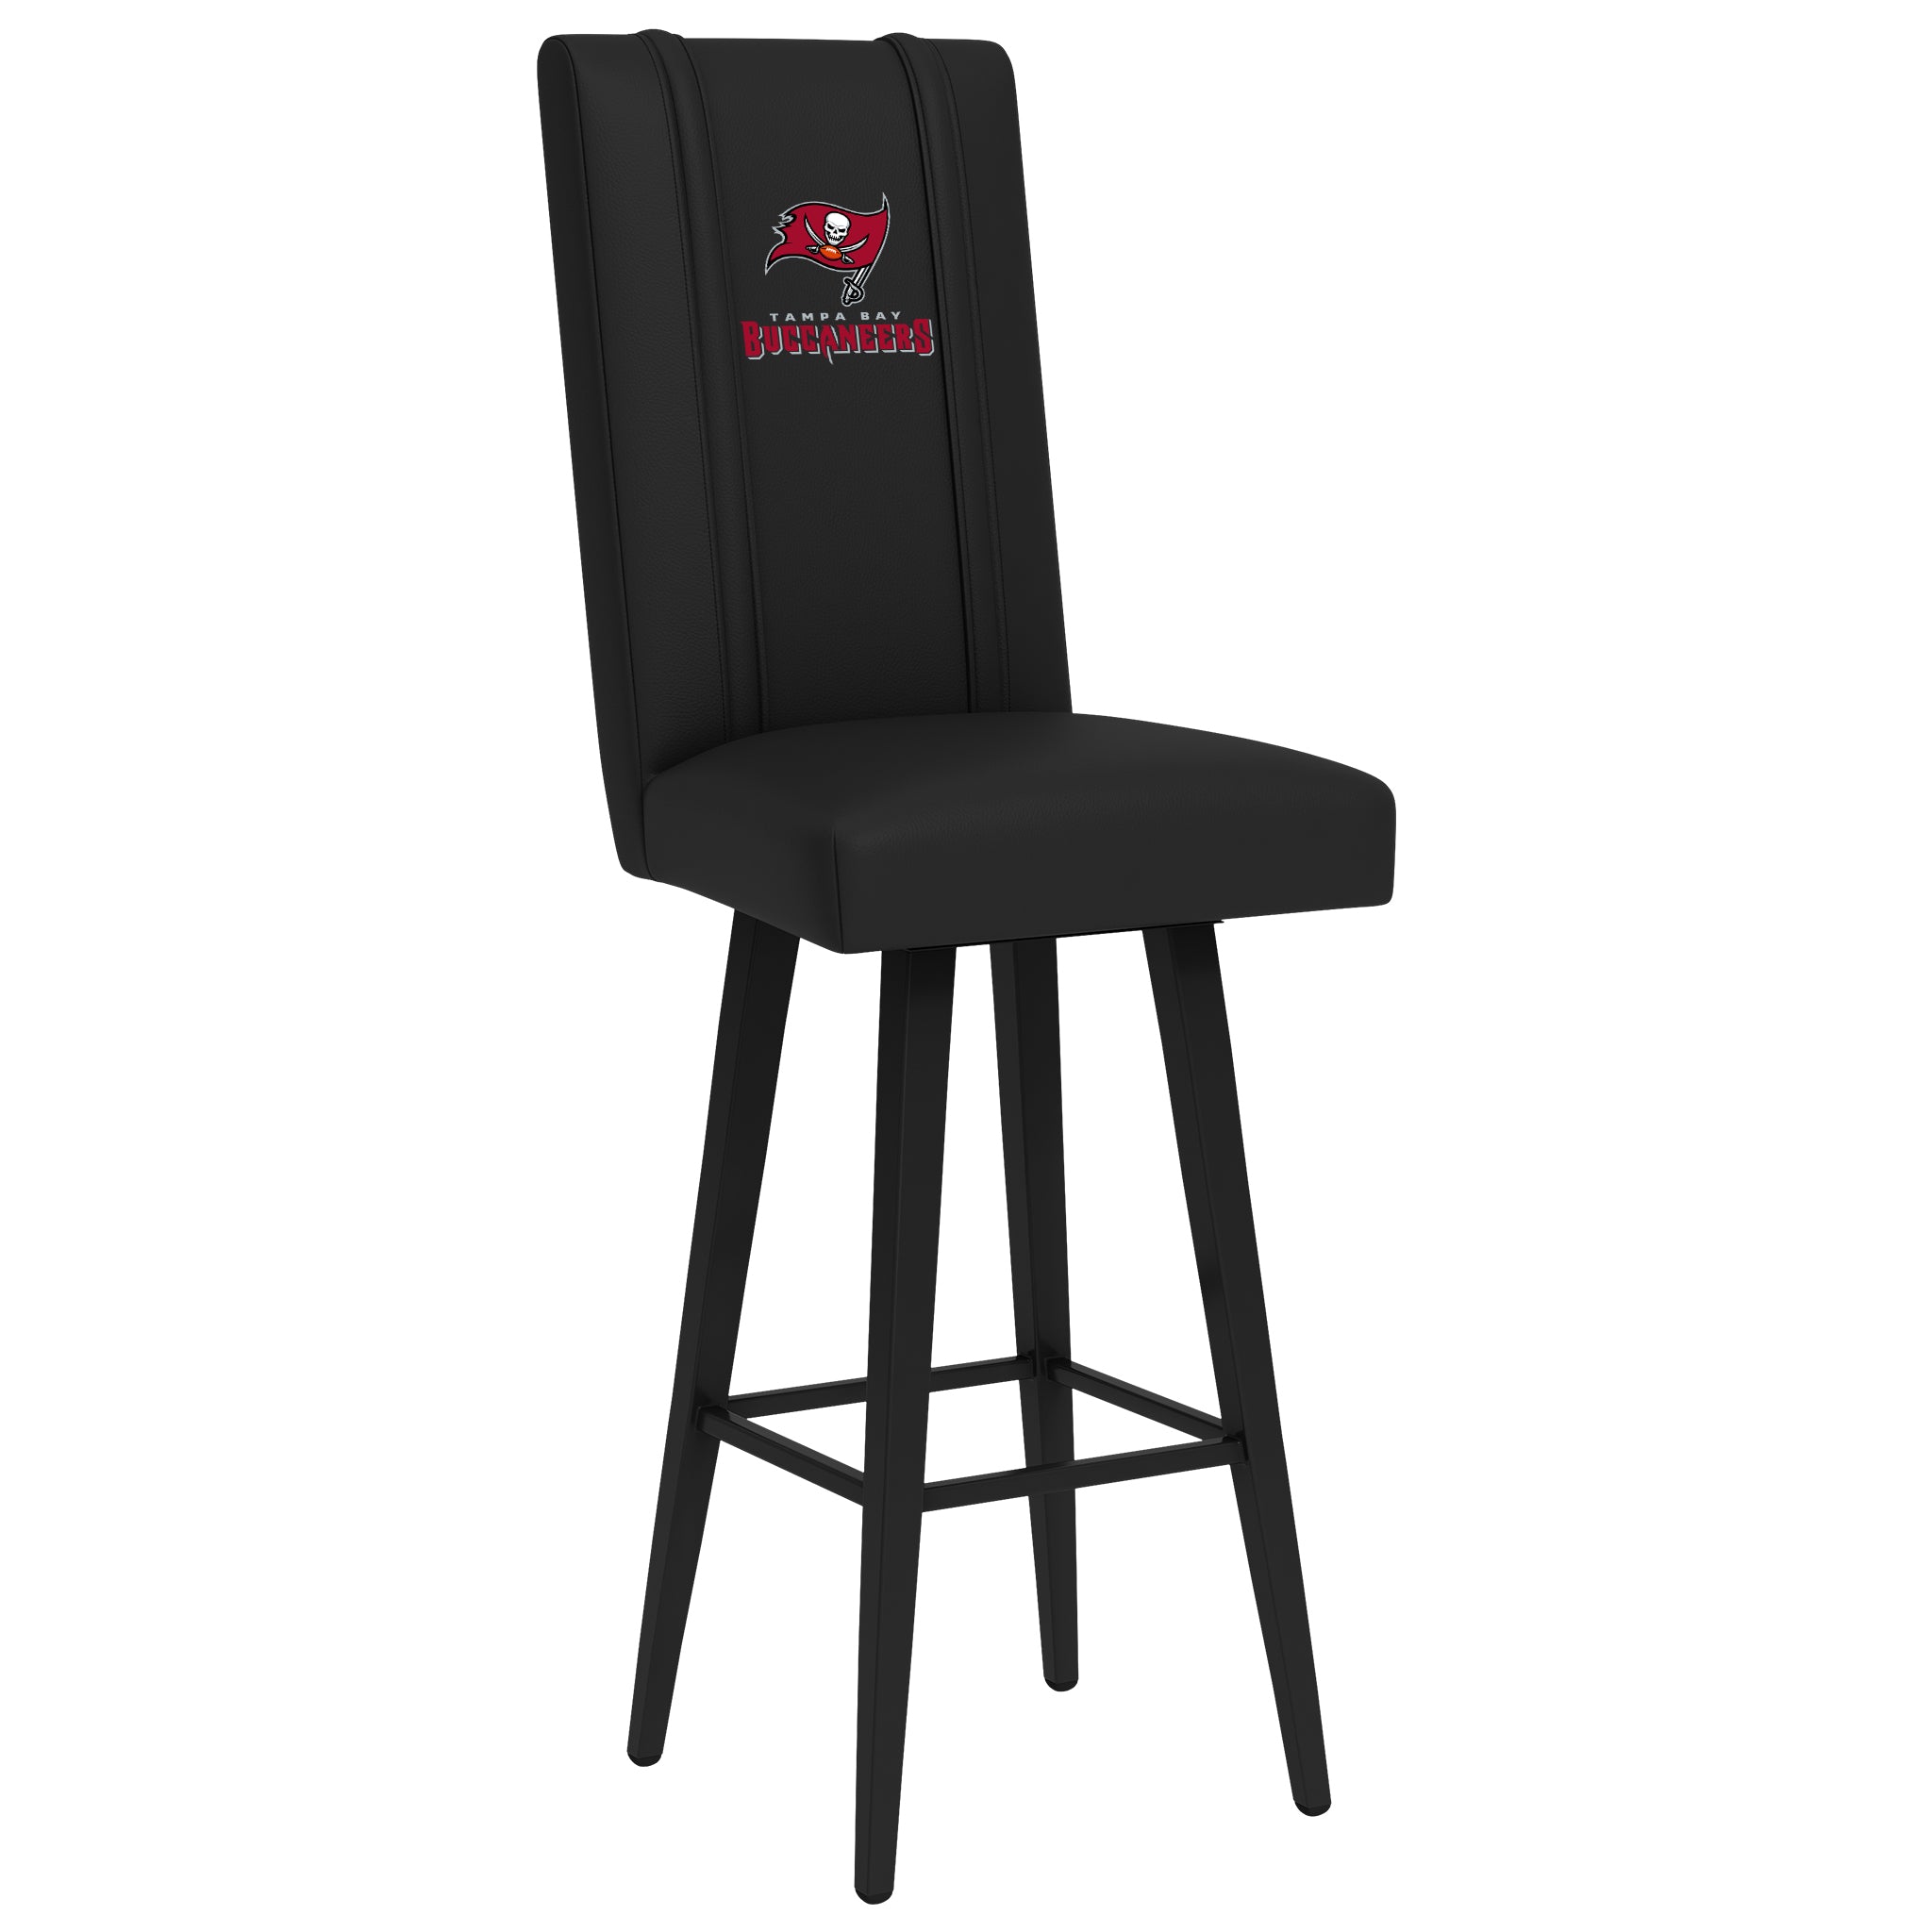 Tampa Bay Buccaneers Swivel Bar Stool - Chair - Furniture - Kitchen